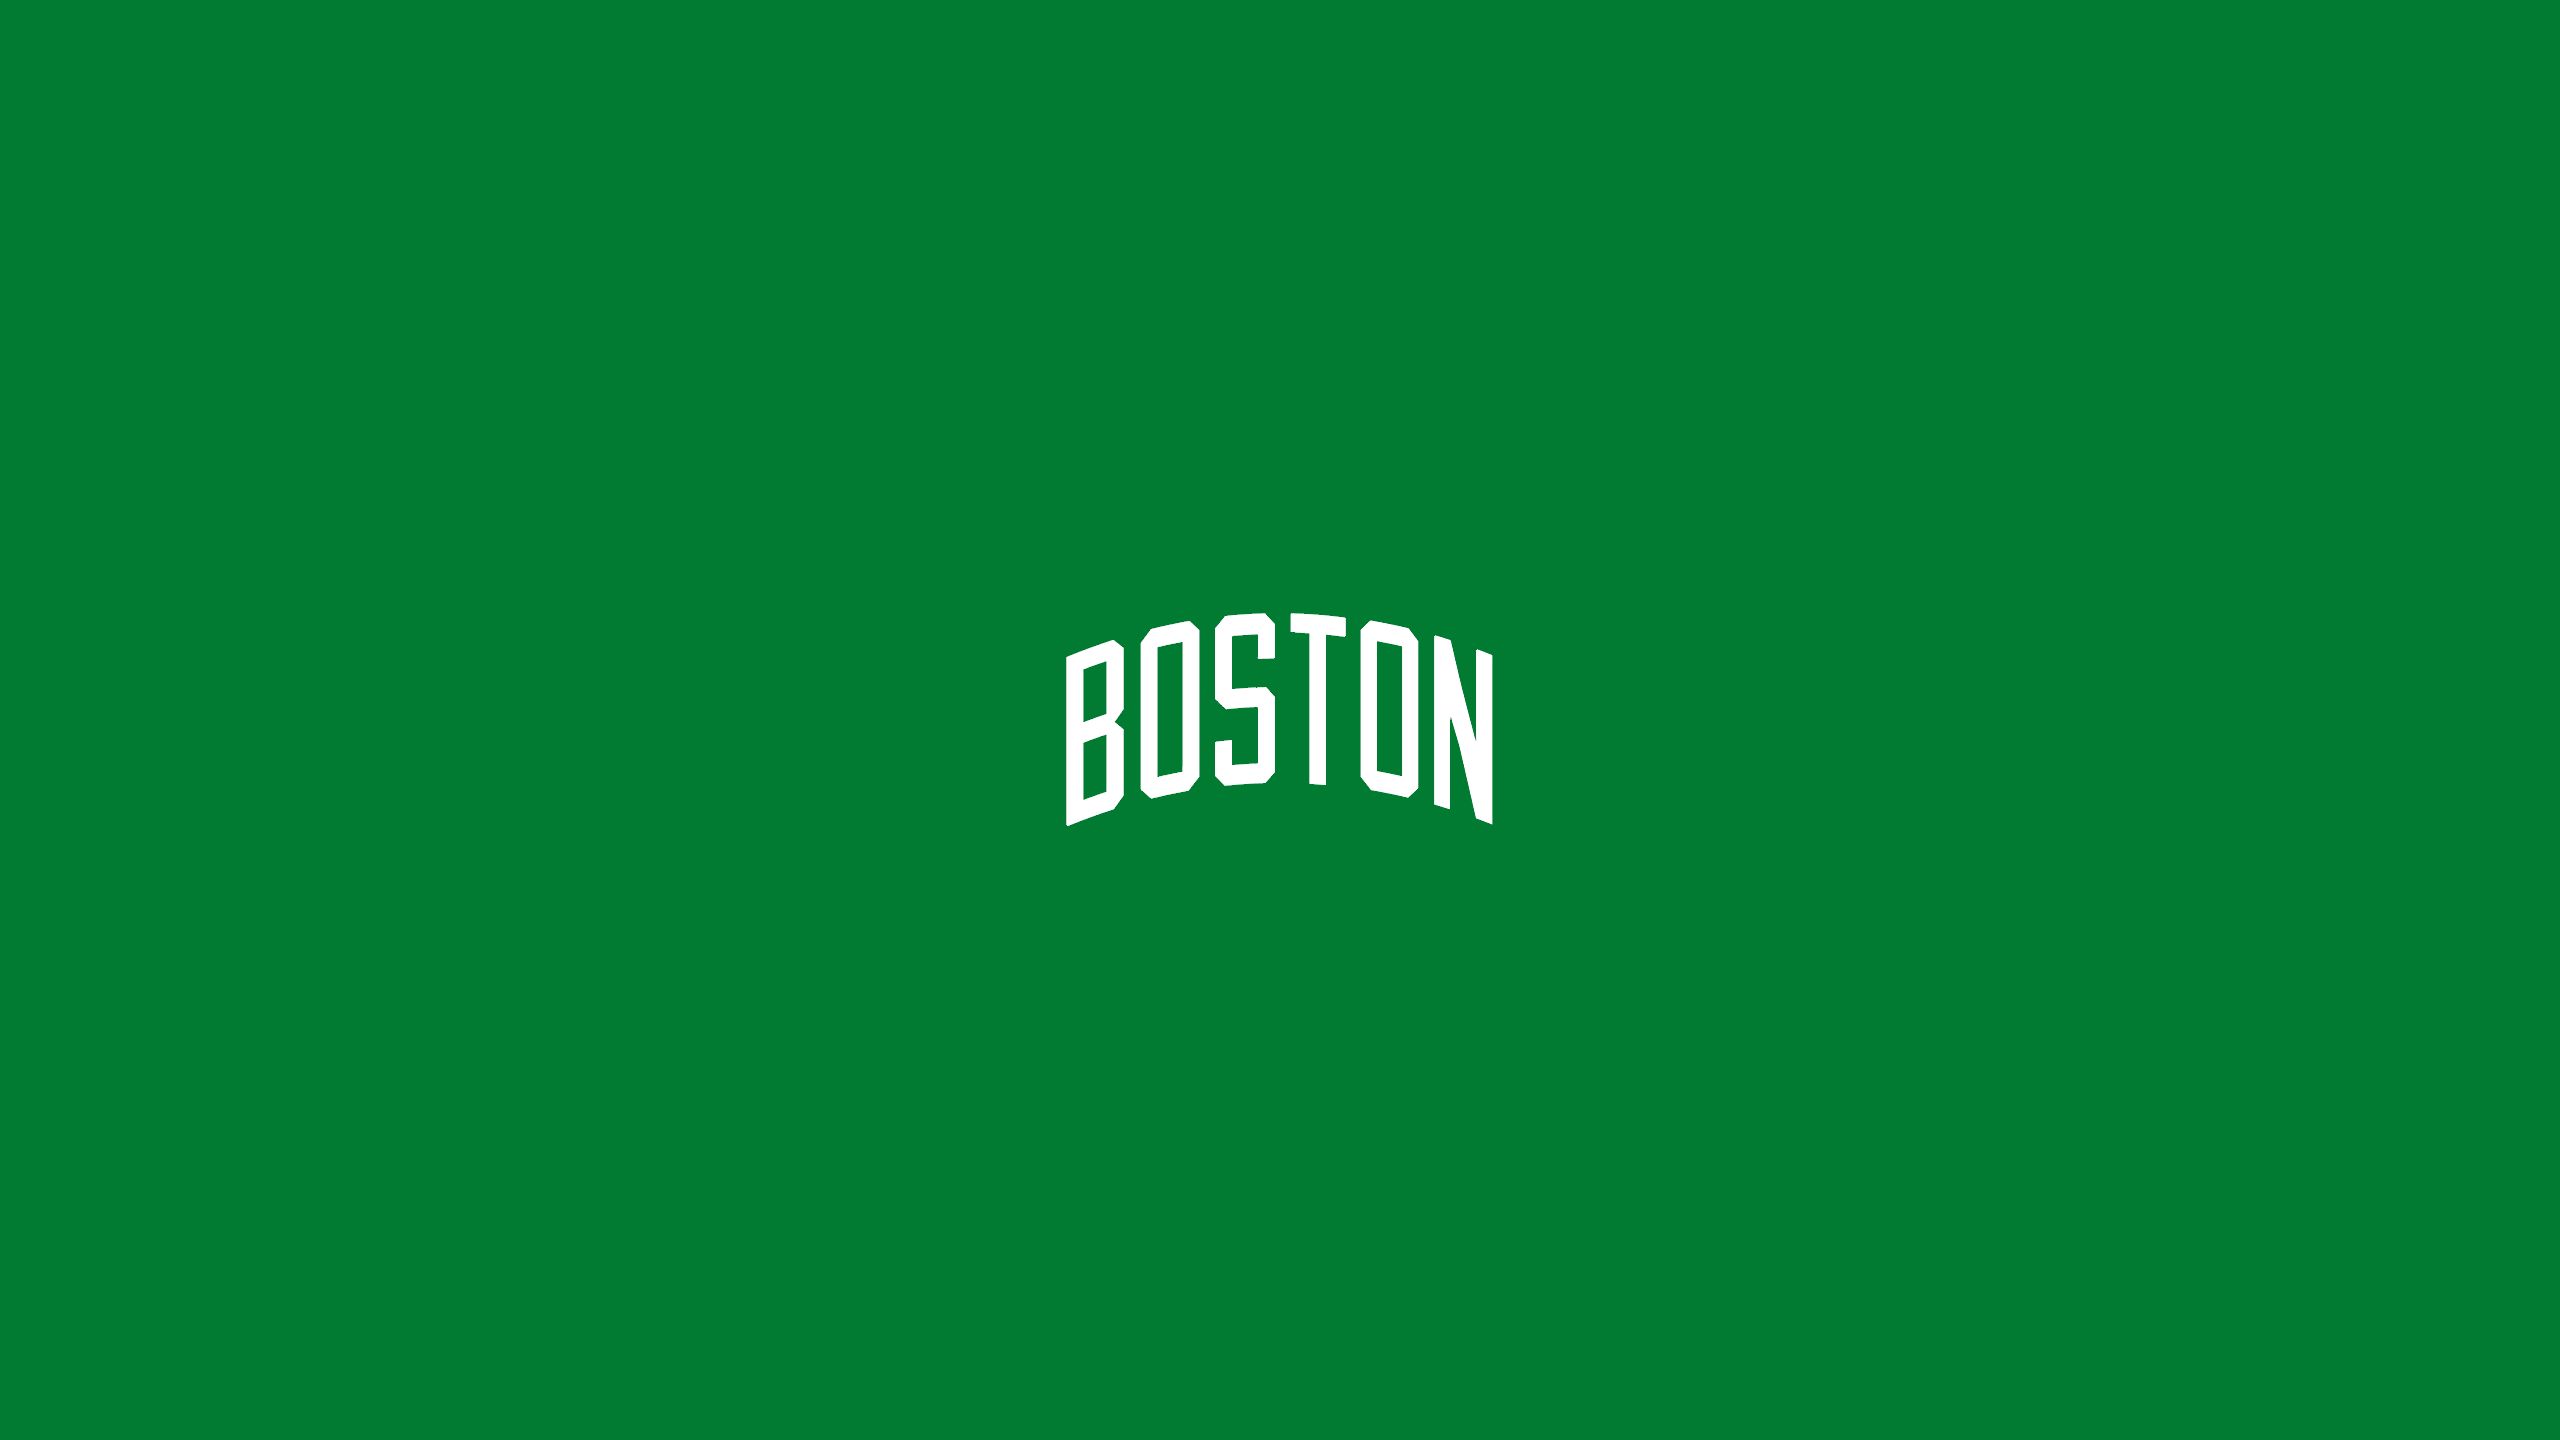 Boston Celtics (NBA) iPhone 6/7/8 Home Screen Wallpaper | Flickr